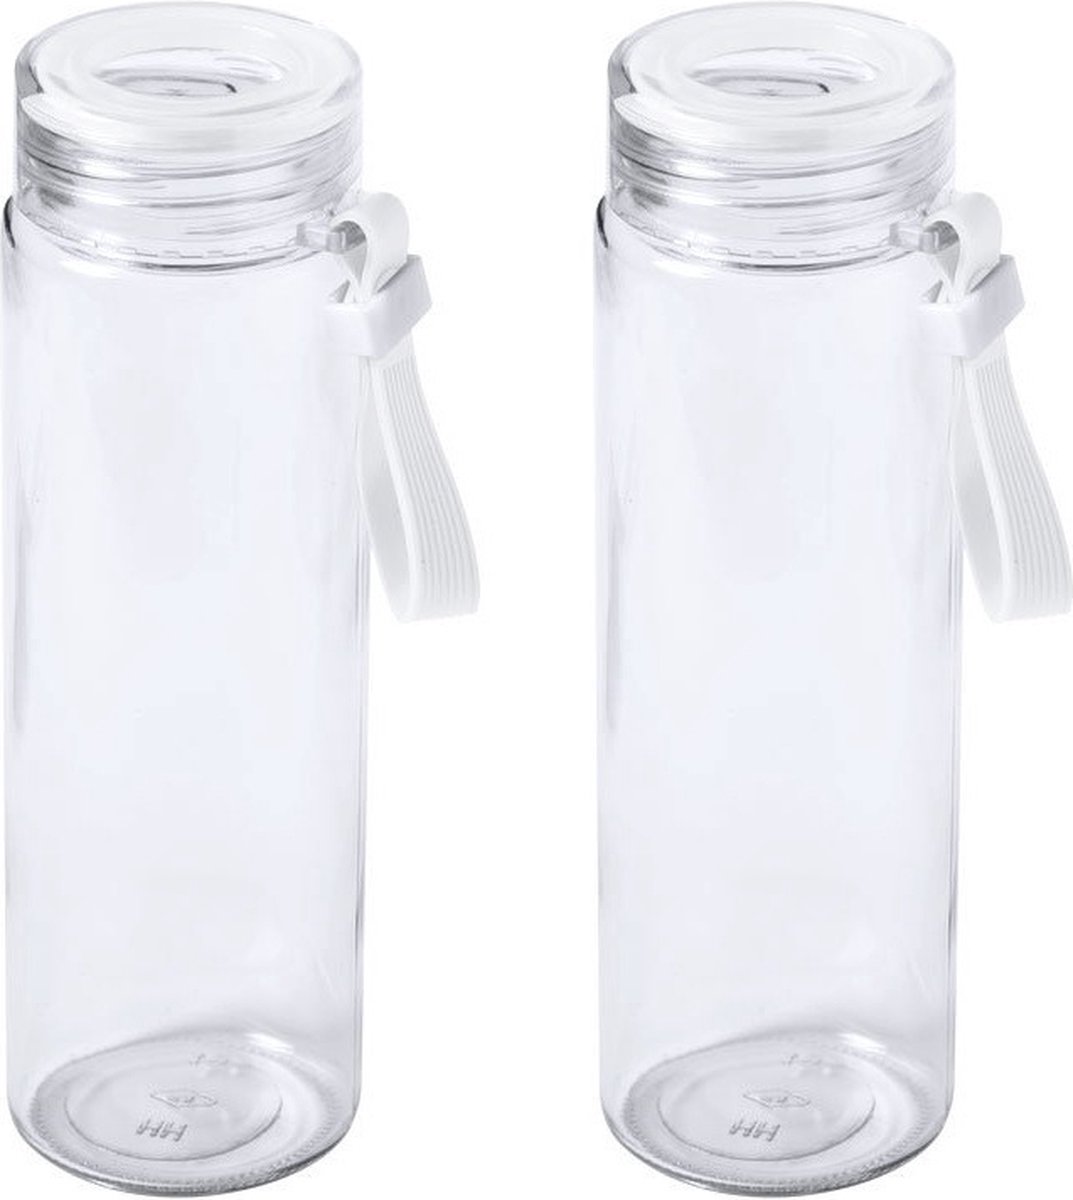 4x Stuks glazen waterfles/drinkfles transparant met schroefdop wit handvat 420 ml - Sportfles - Bidon